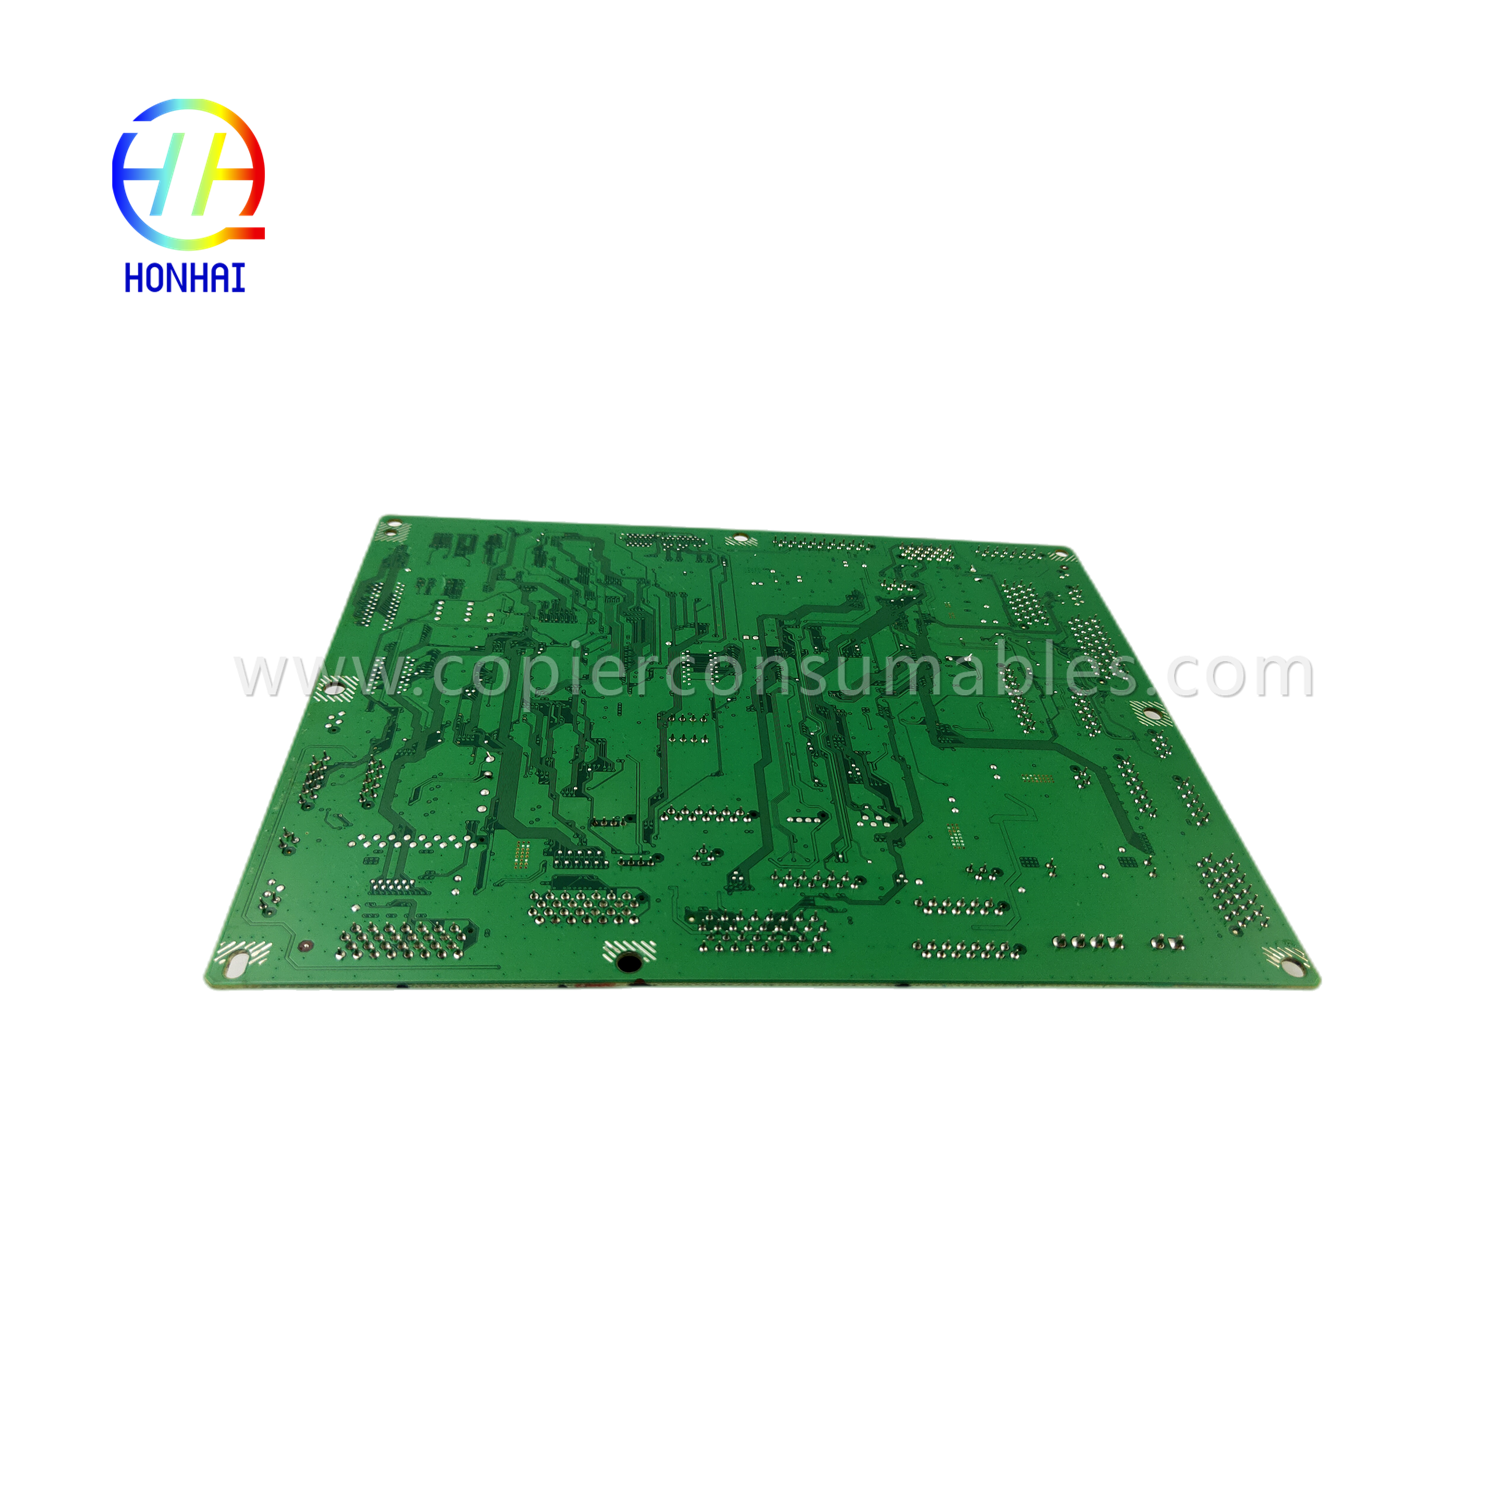 https://c585.goodao.net/bicu-board-for-ricoh-3045-3035-lanier-ld235-ld245-savin-4035-4045-bicu-board-assemble-product/